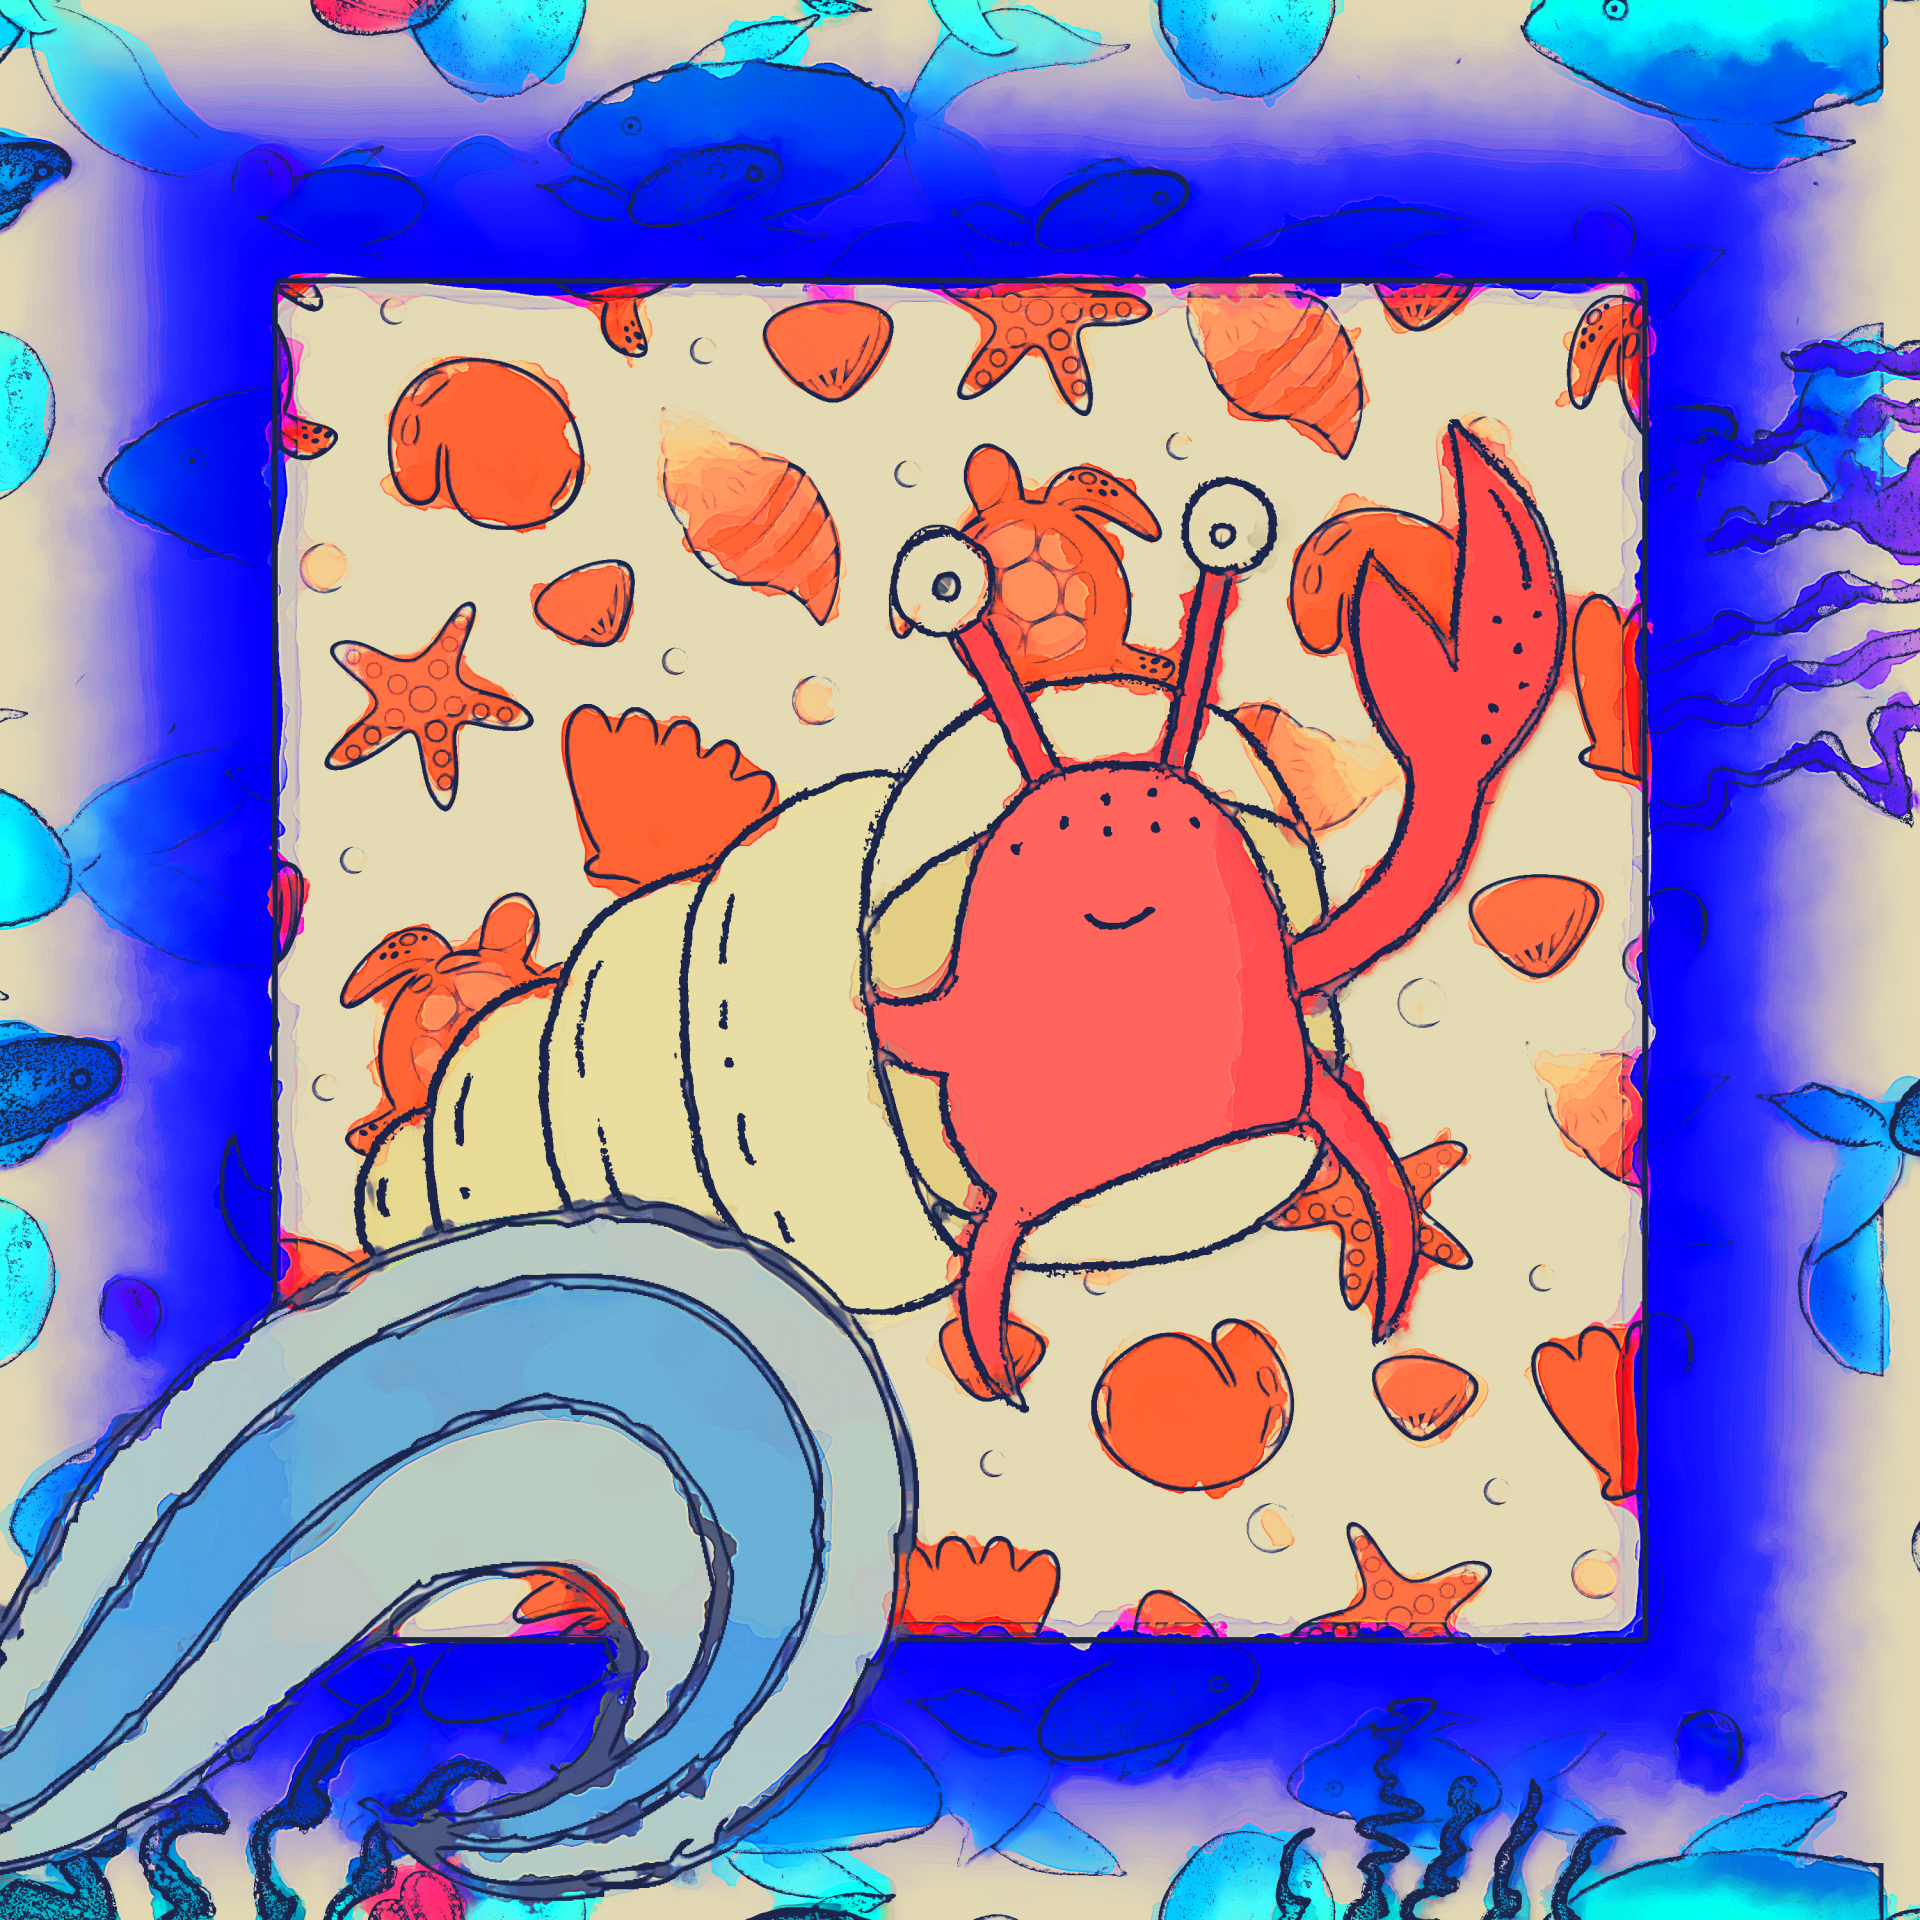 cute cartoon art of a crab in its shell waving